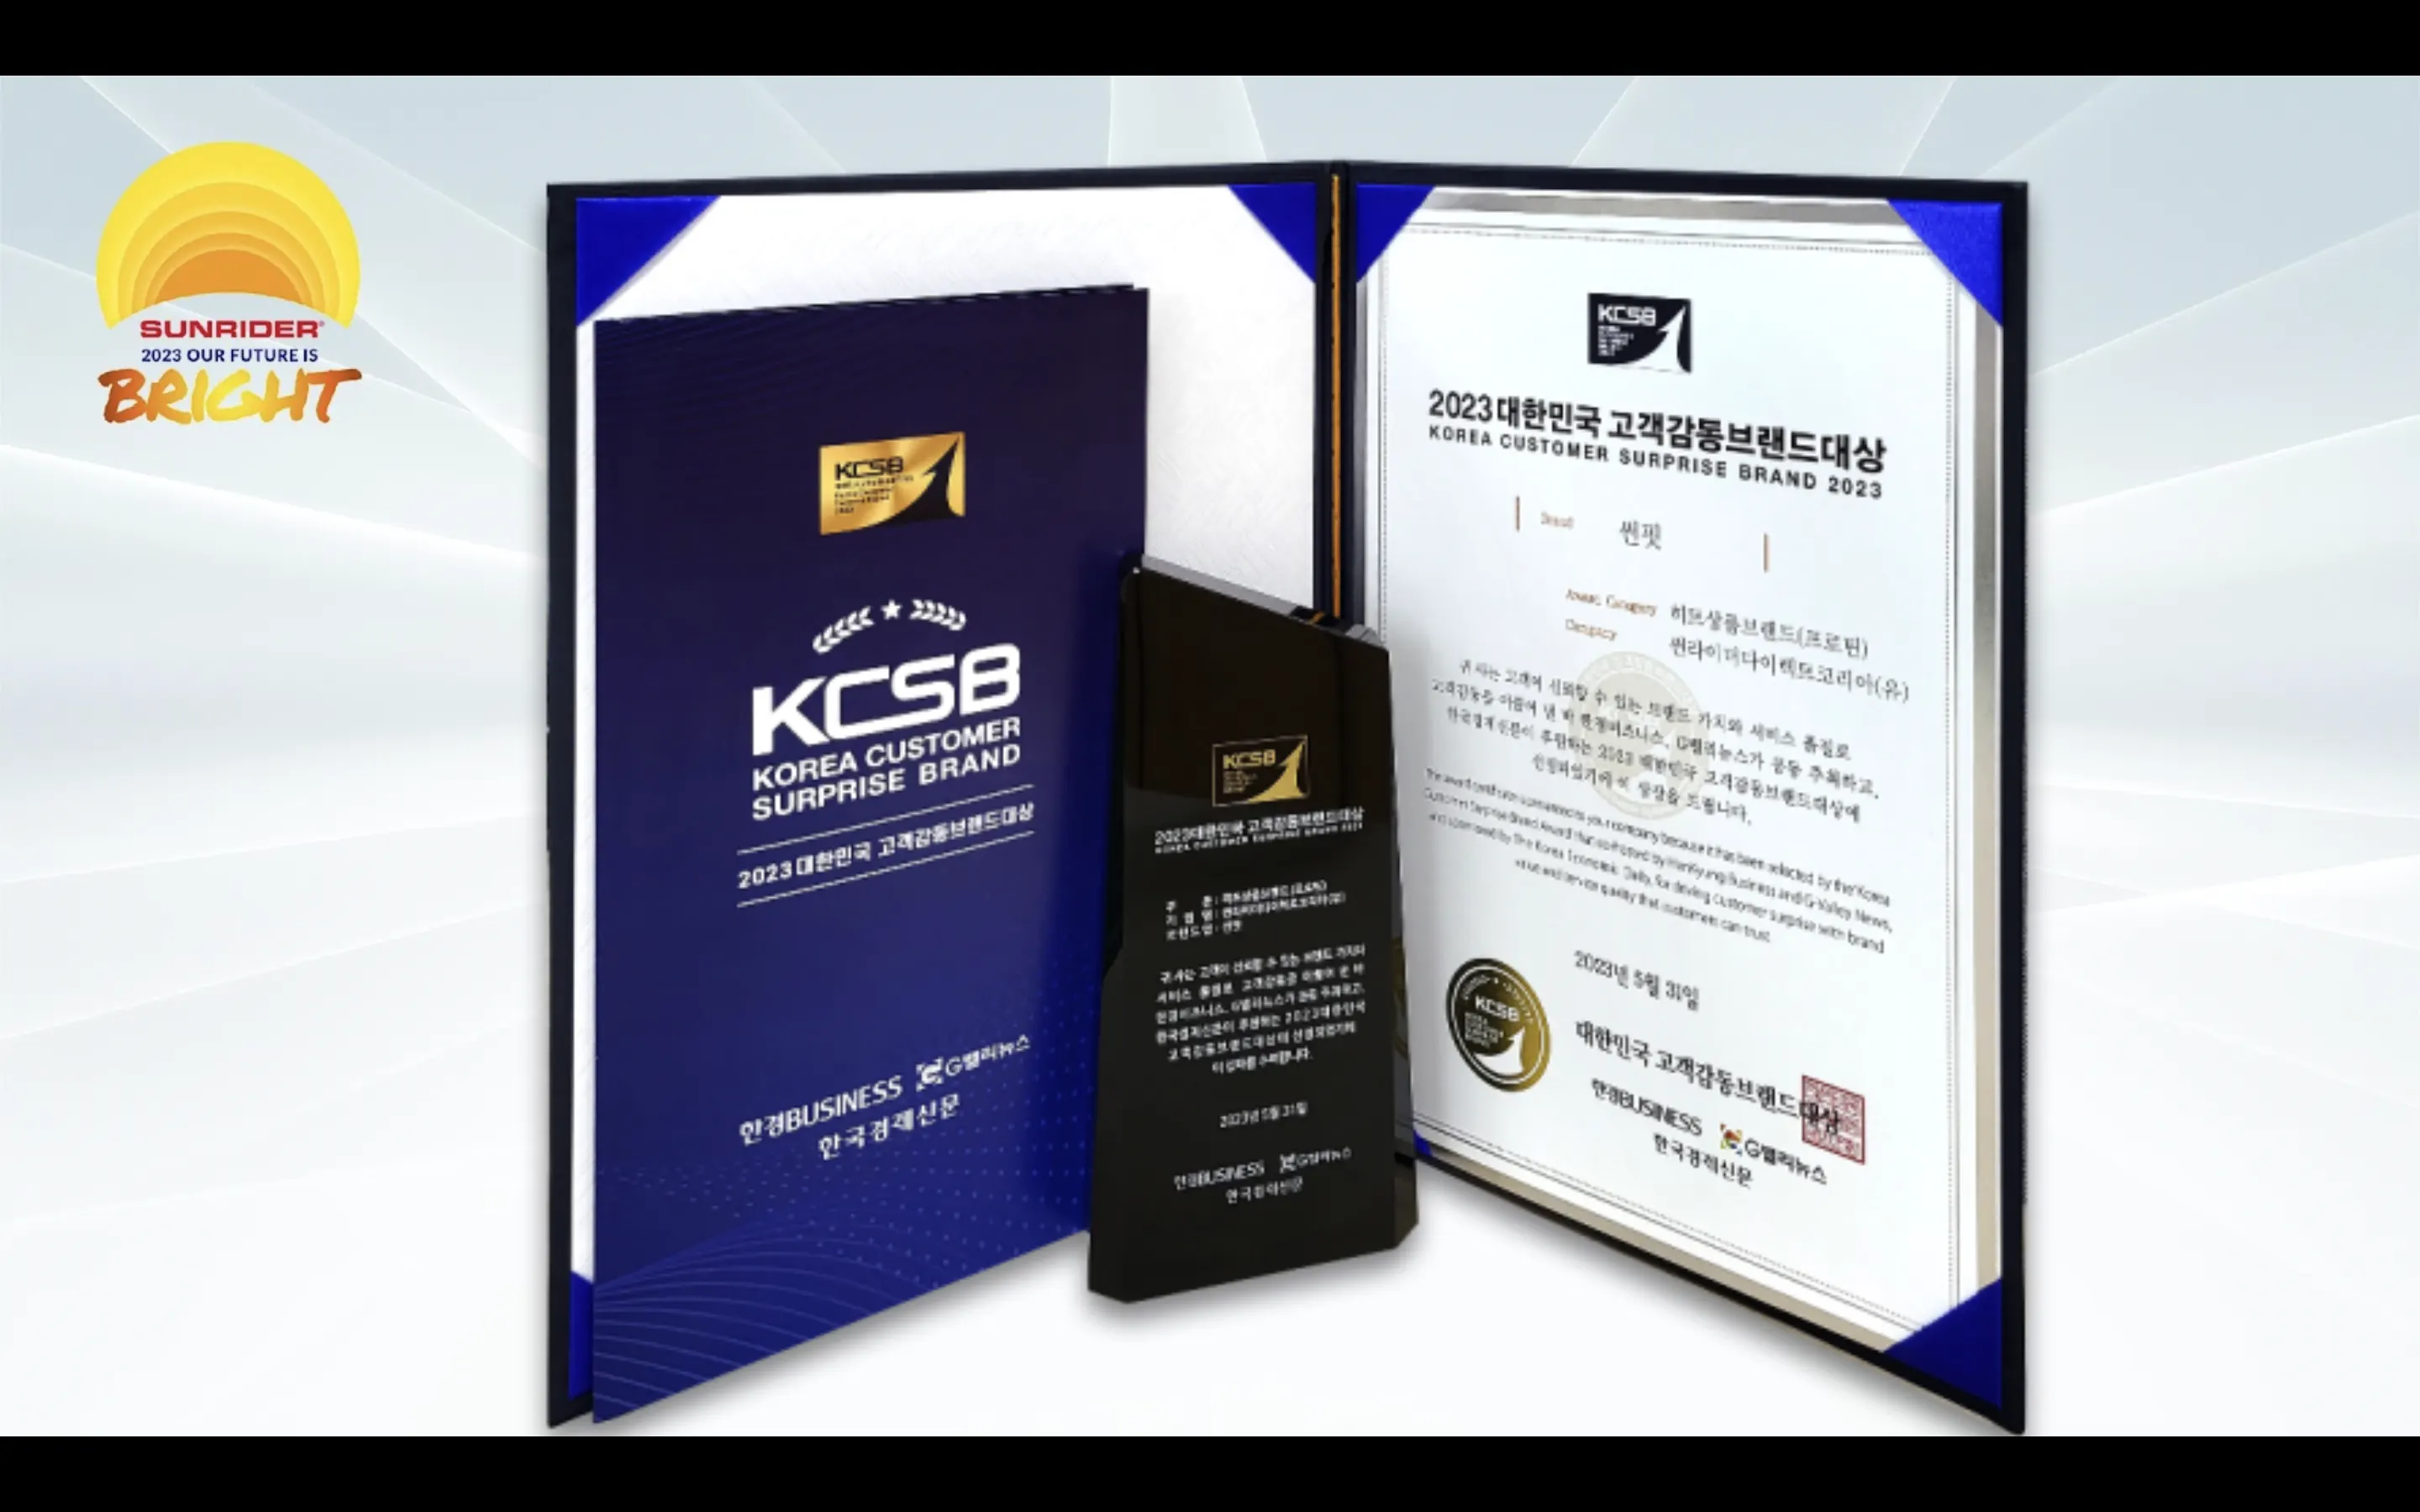 Korea Customer Surprise Brand Award 2023 2